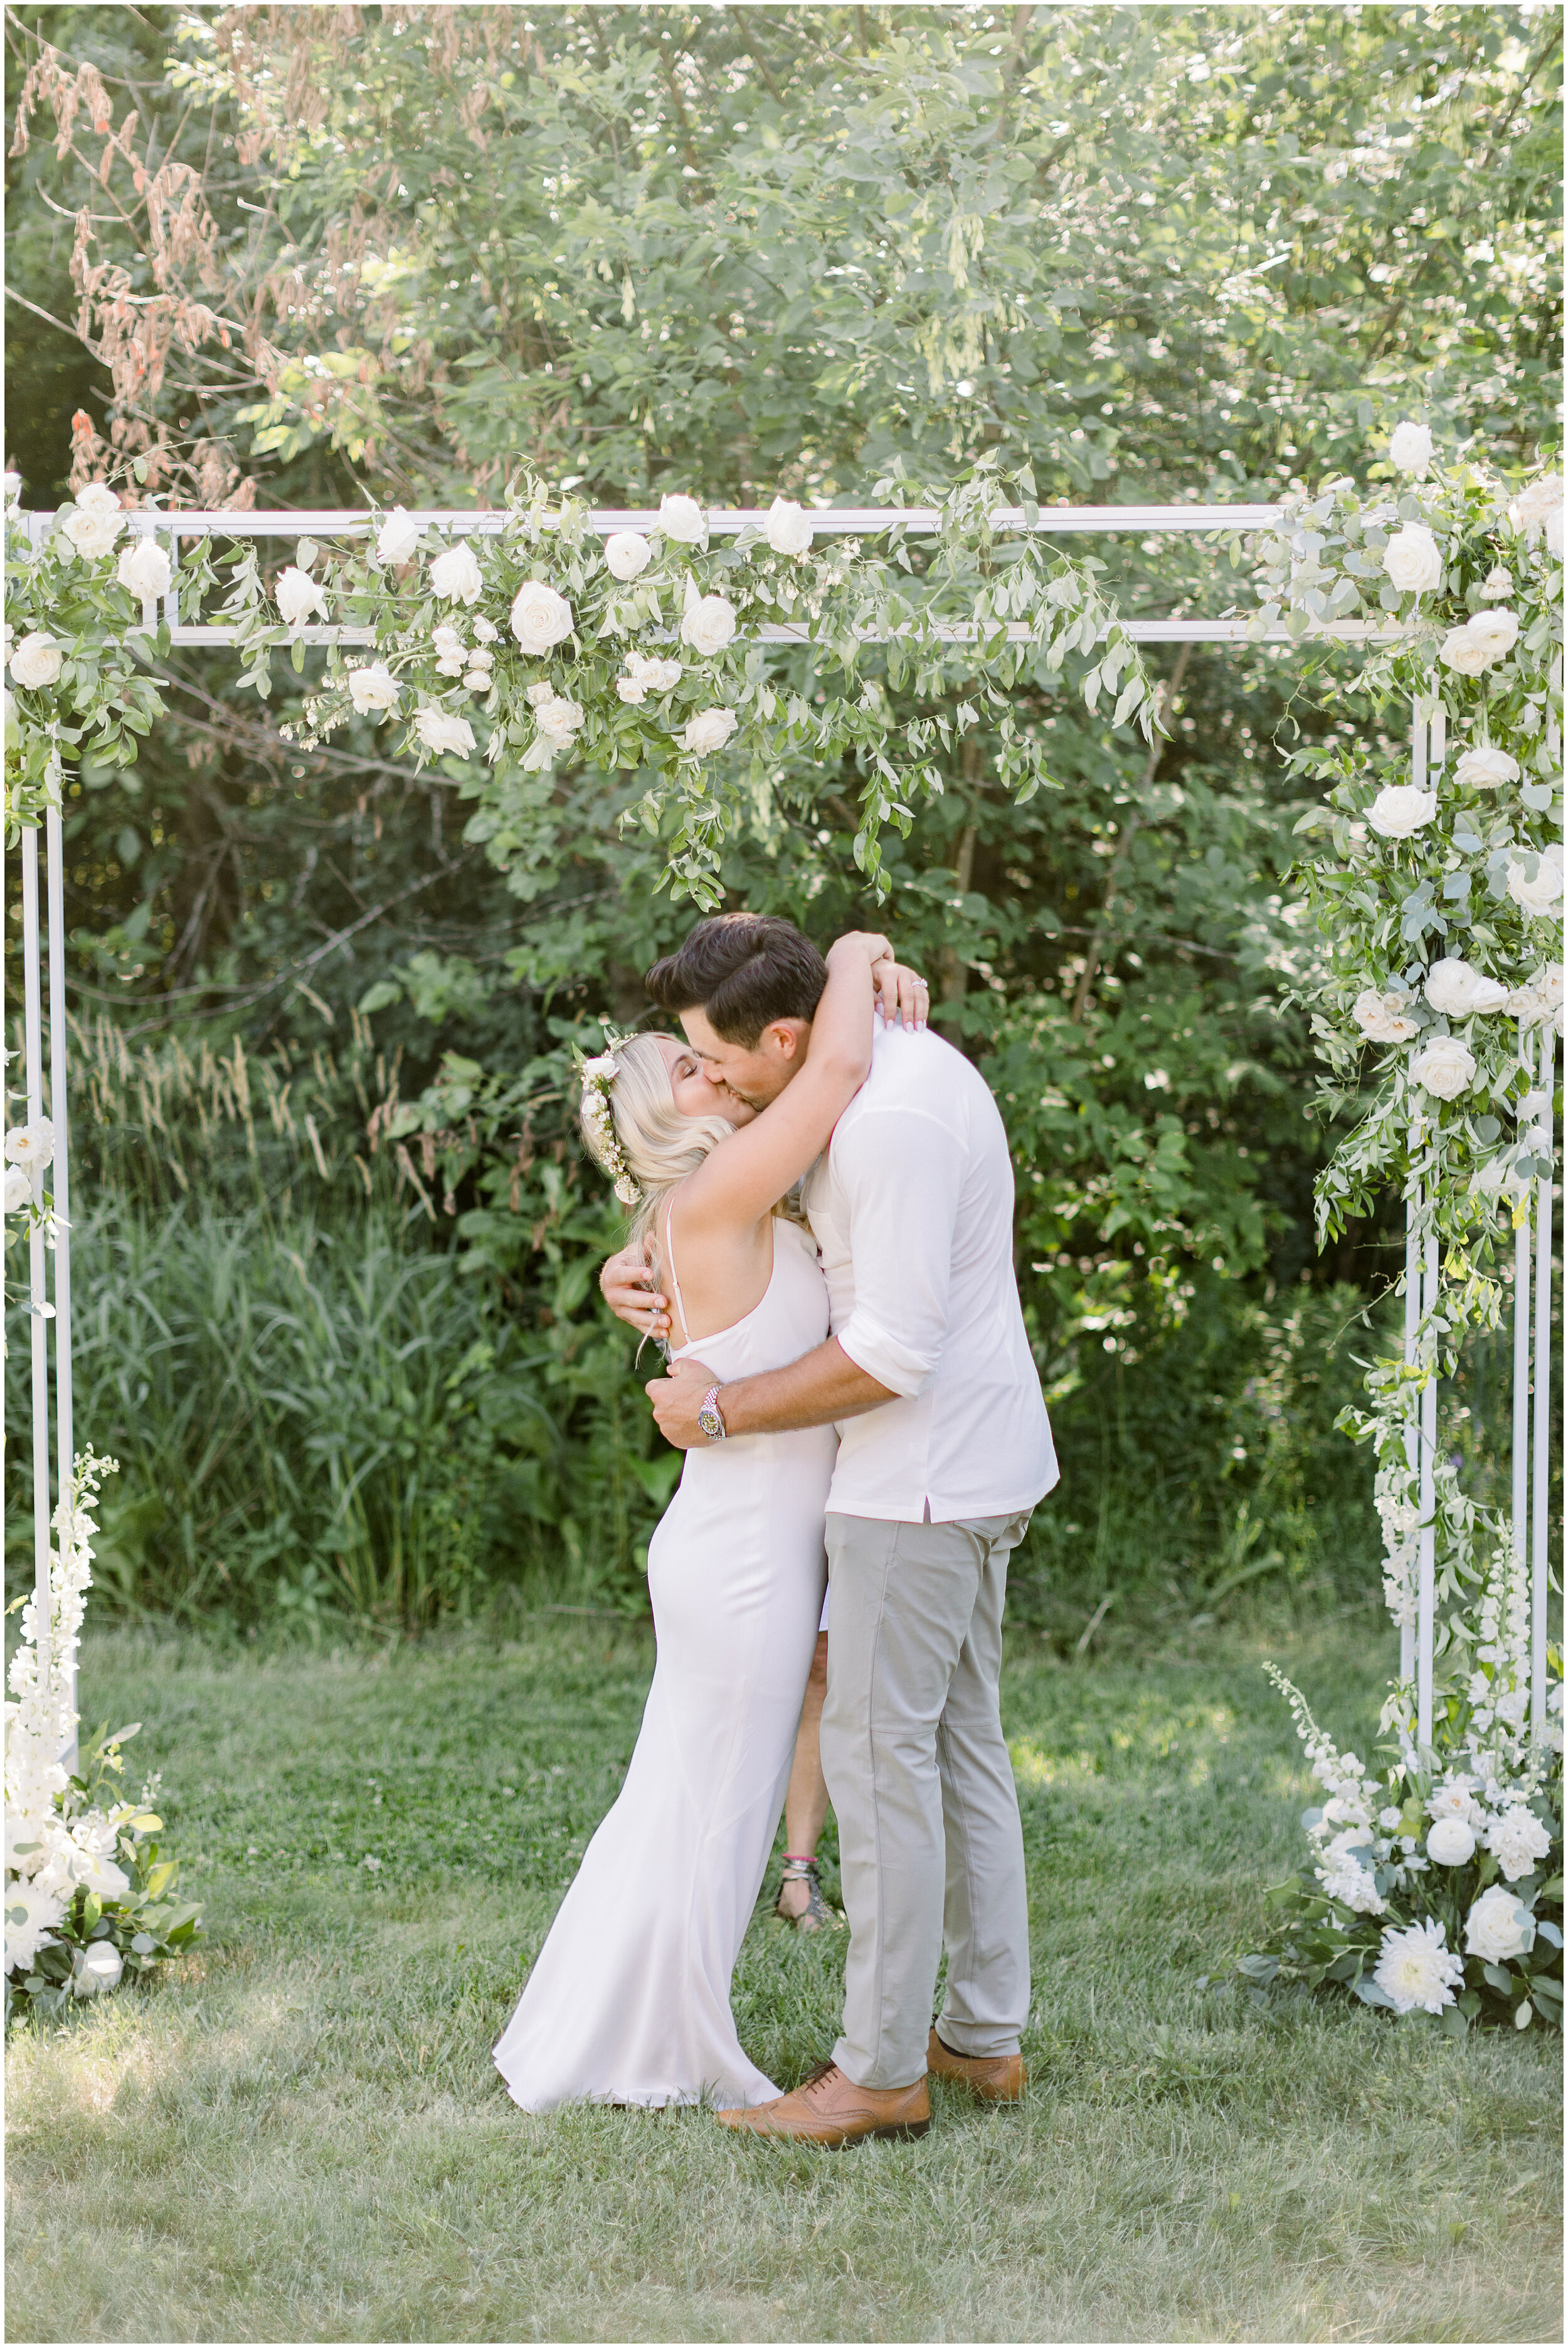 Jamie + Cody's Intimate Mini Wedding — Chelsea Mason Photography